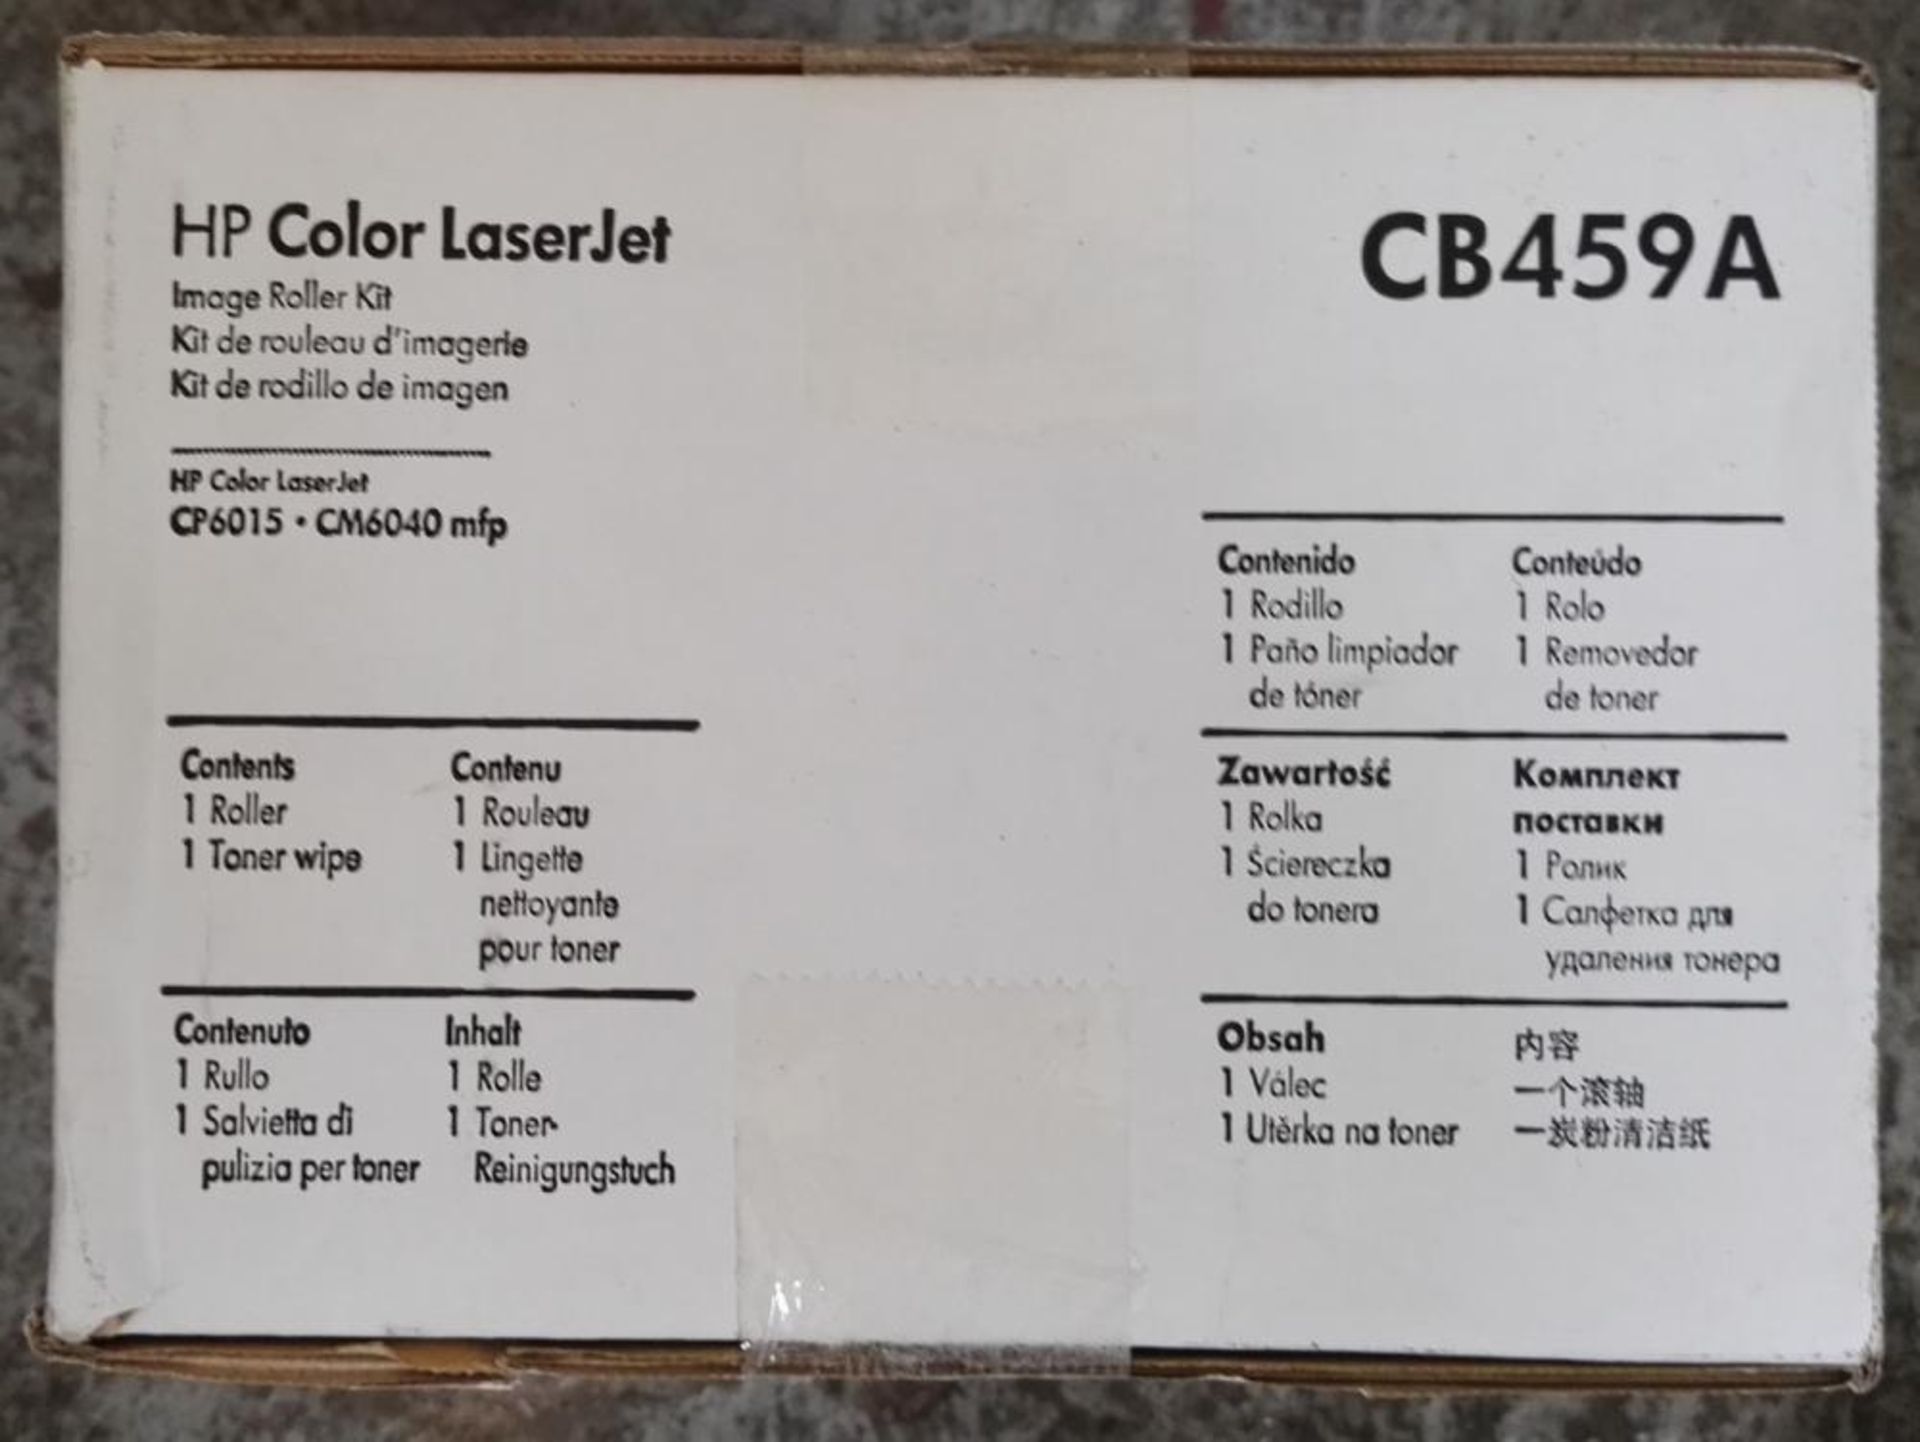 1 x HP Laserjet Printer Roller Kit - New/Sealed/Unused - Genuine HP - CL400 - Ref: CB459A - - Image 3 of 3